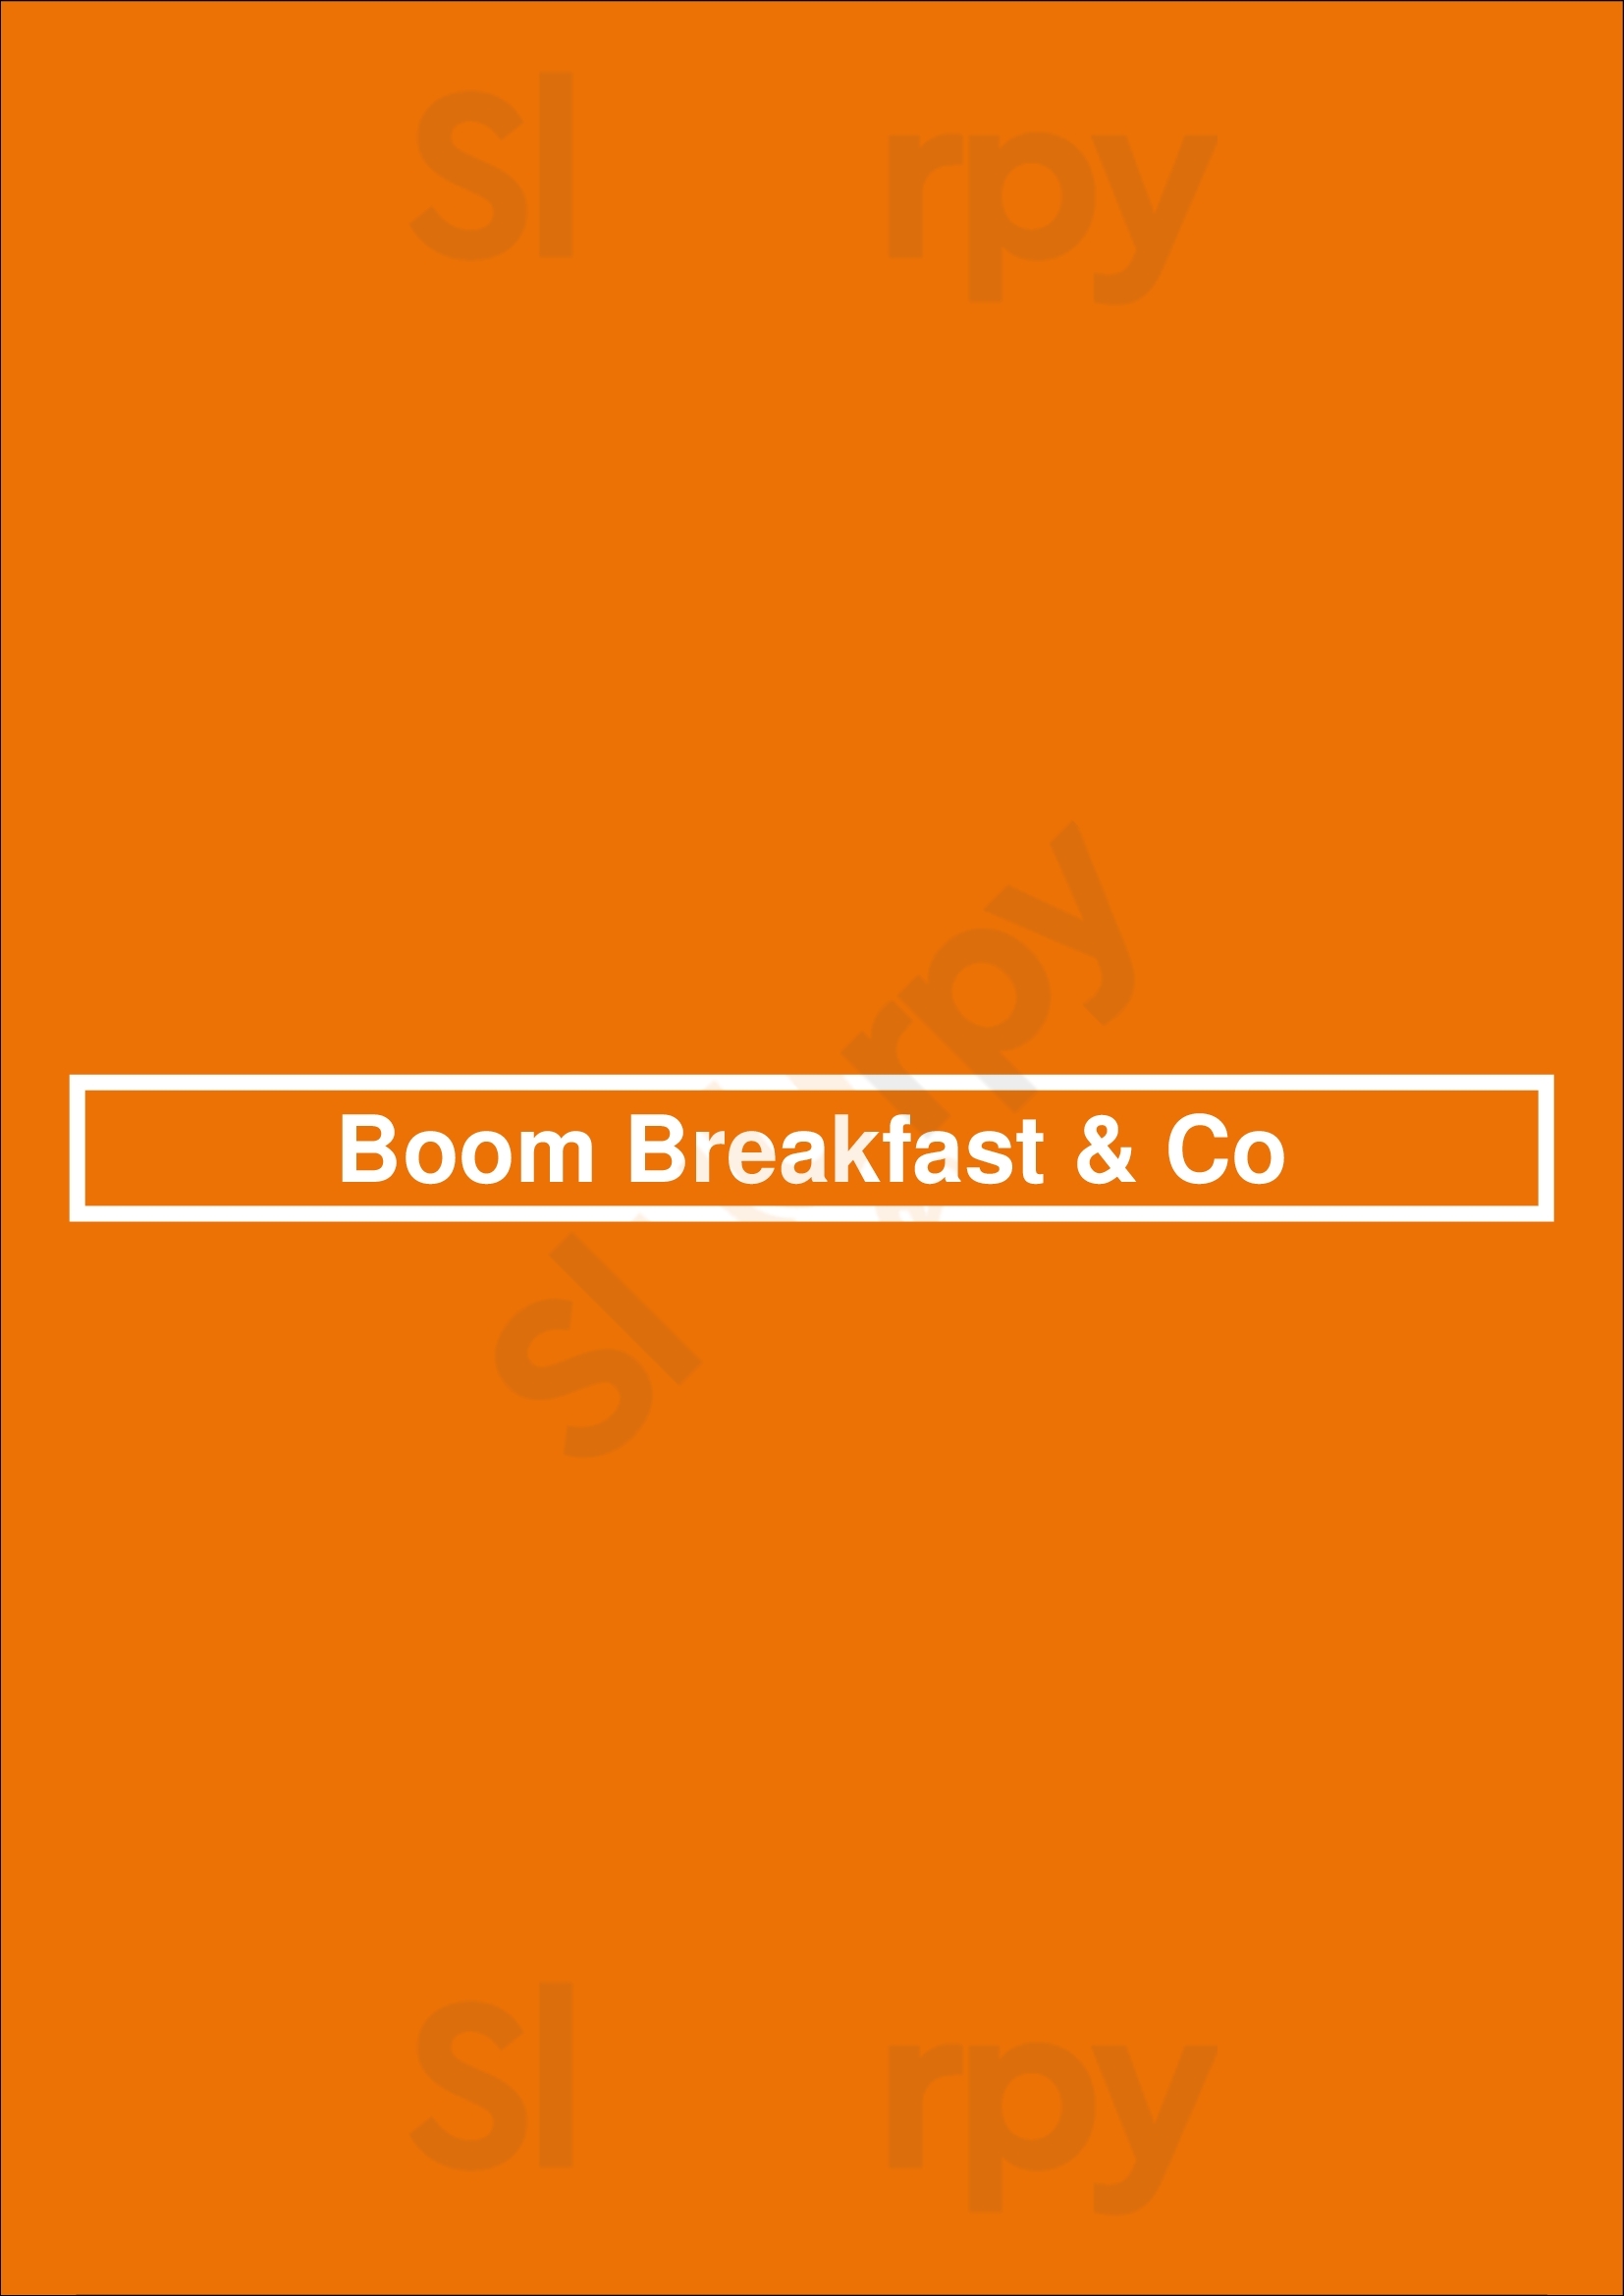 Boom Breakfast & Co Woodbridge Menu - 1